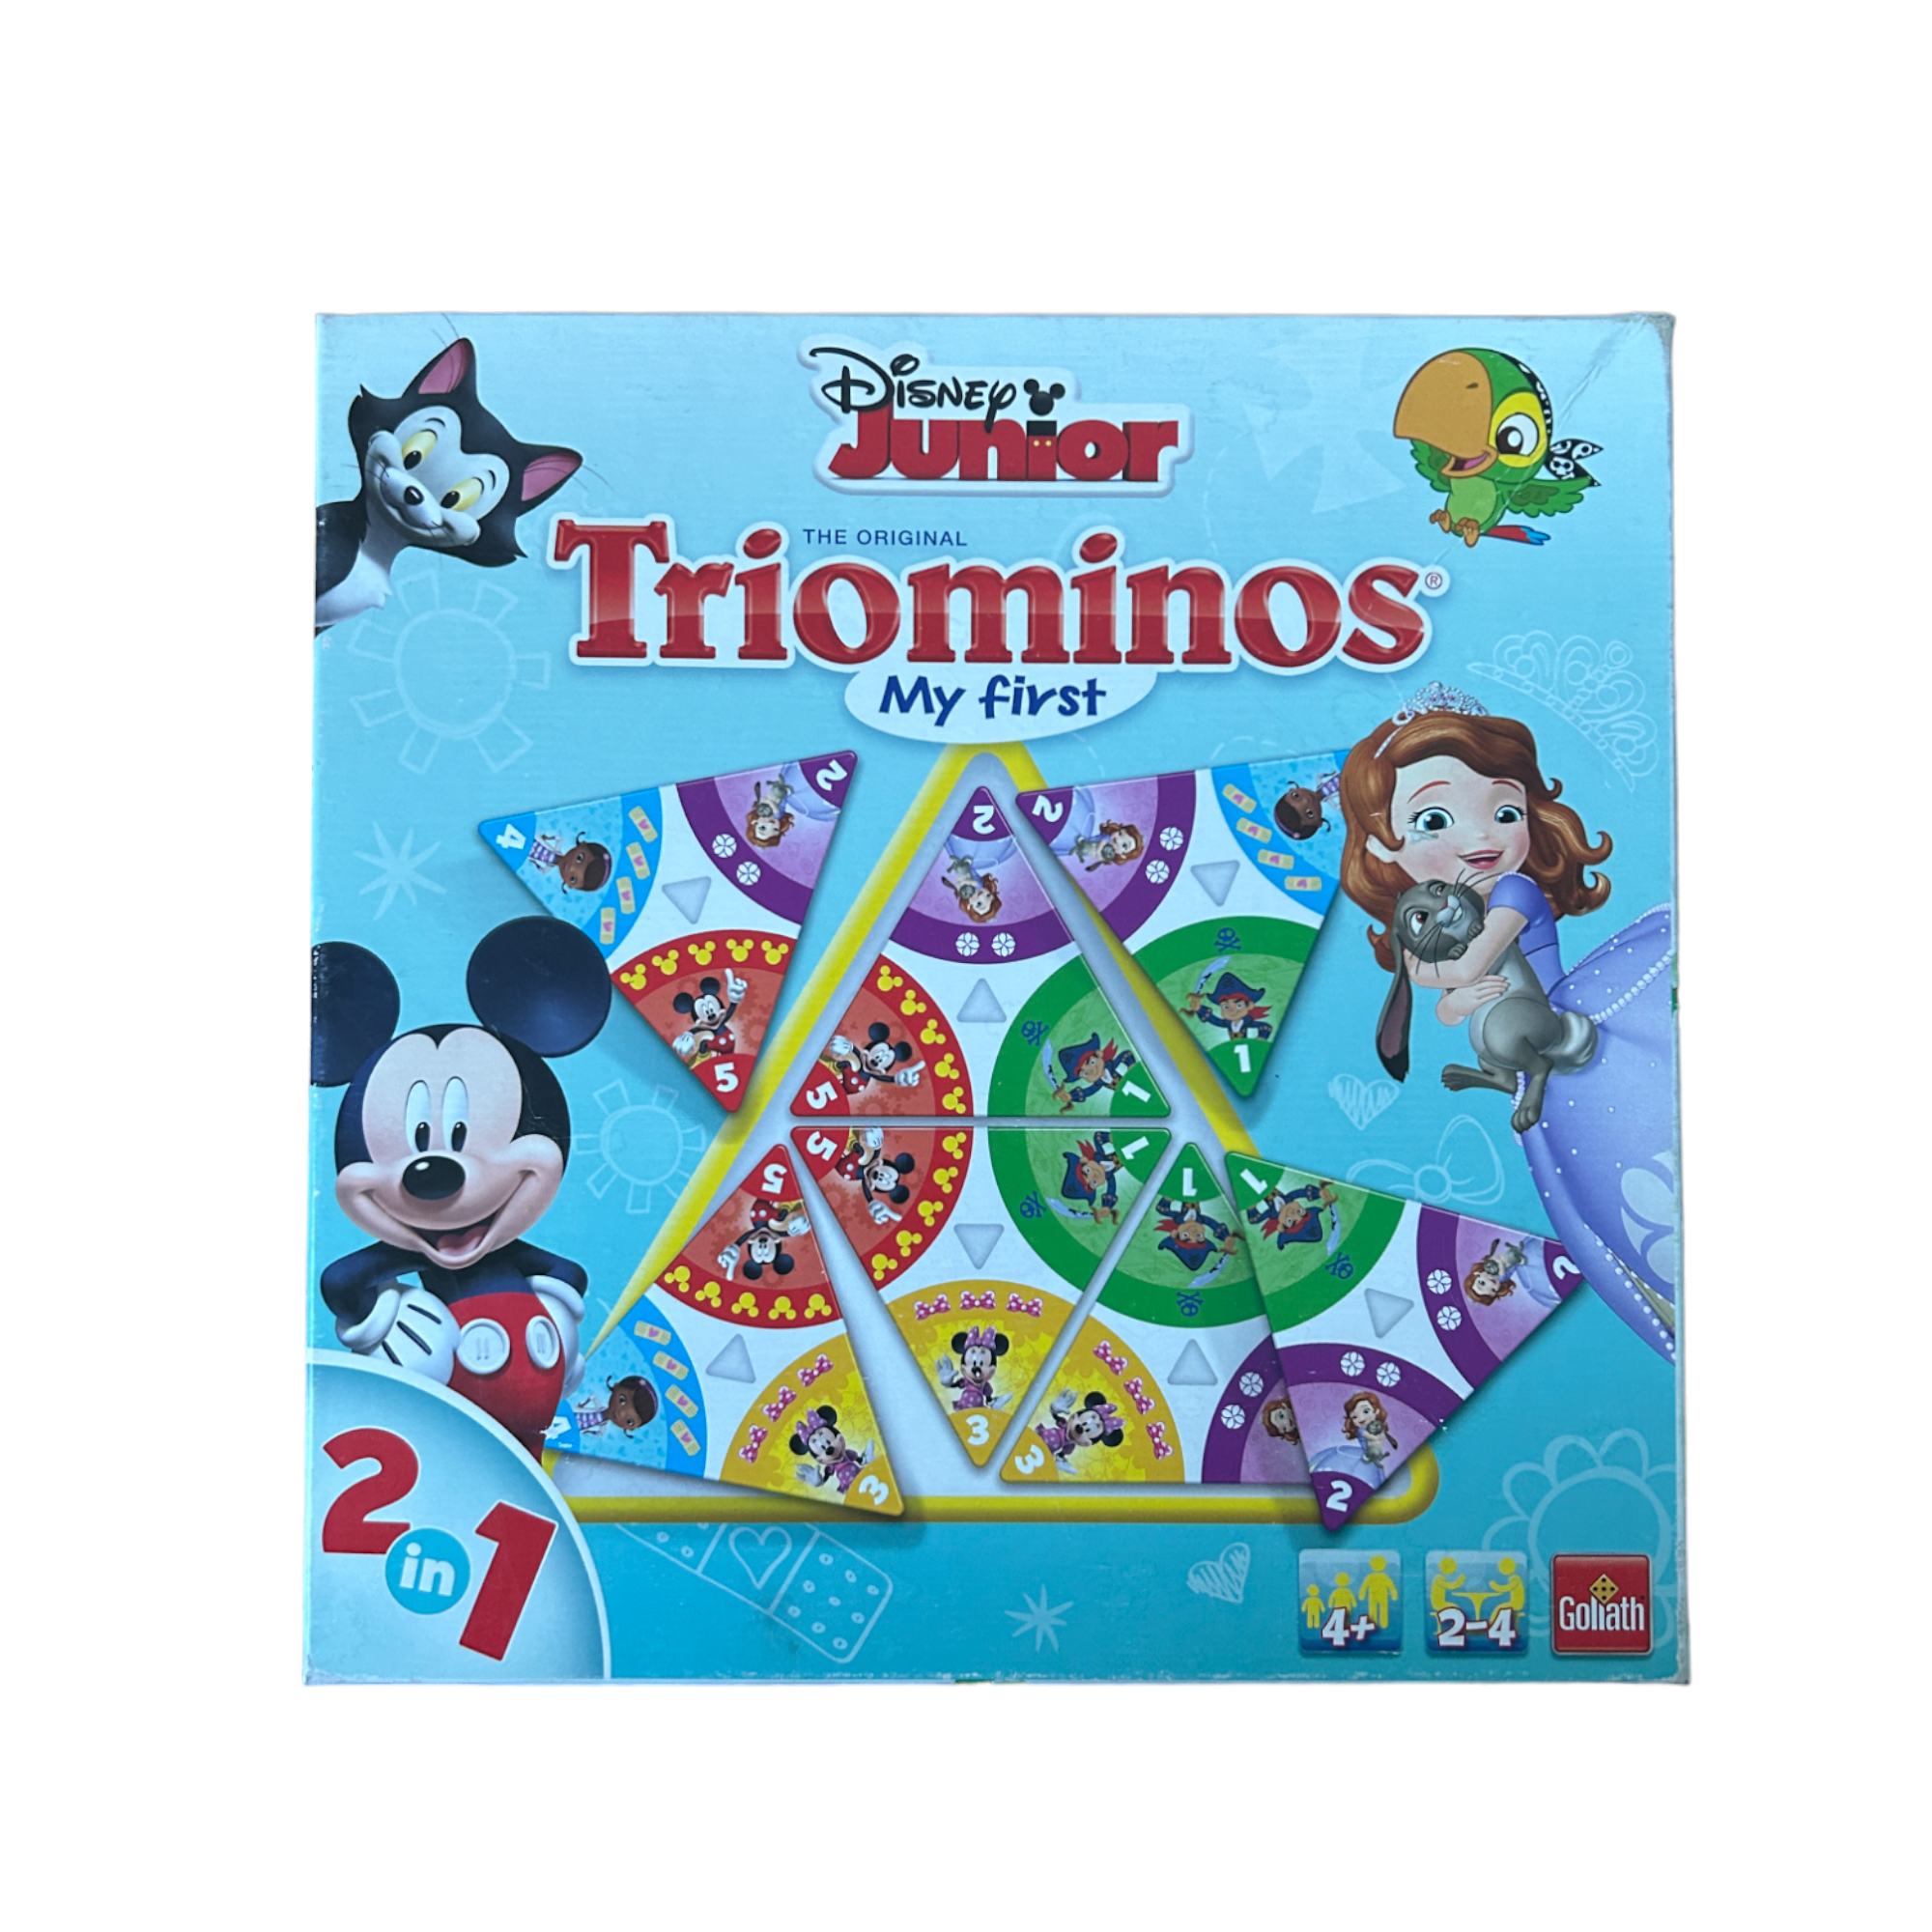 Triominos Junior Disney – Yoti Boutique